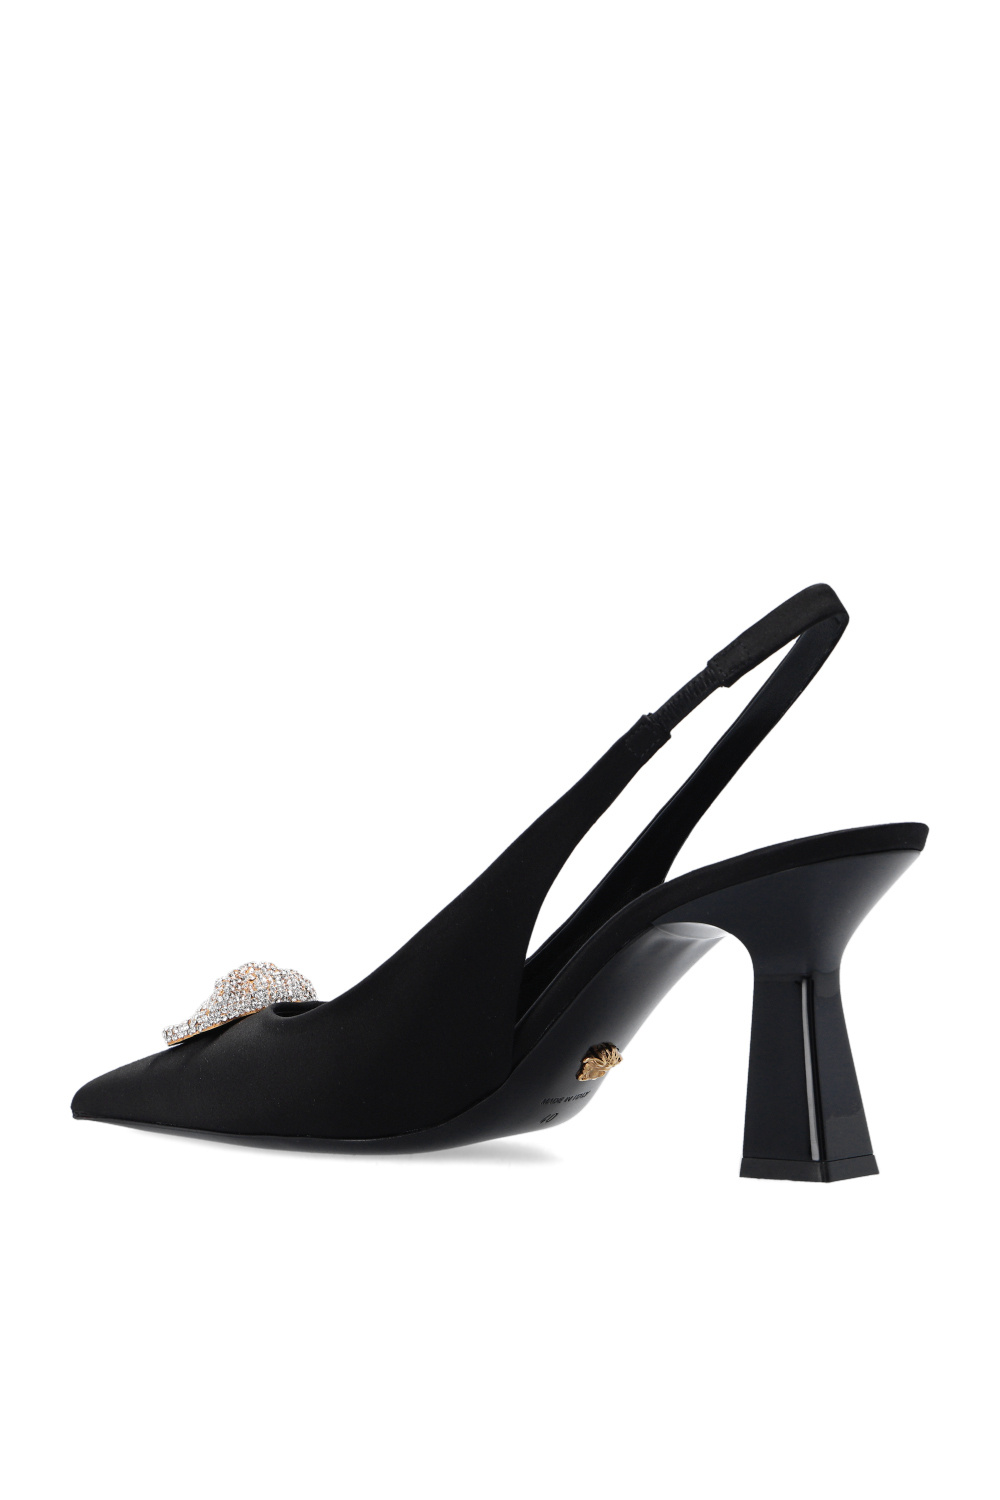 Versace slides with logo giorgio armani shoes